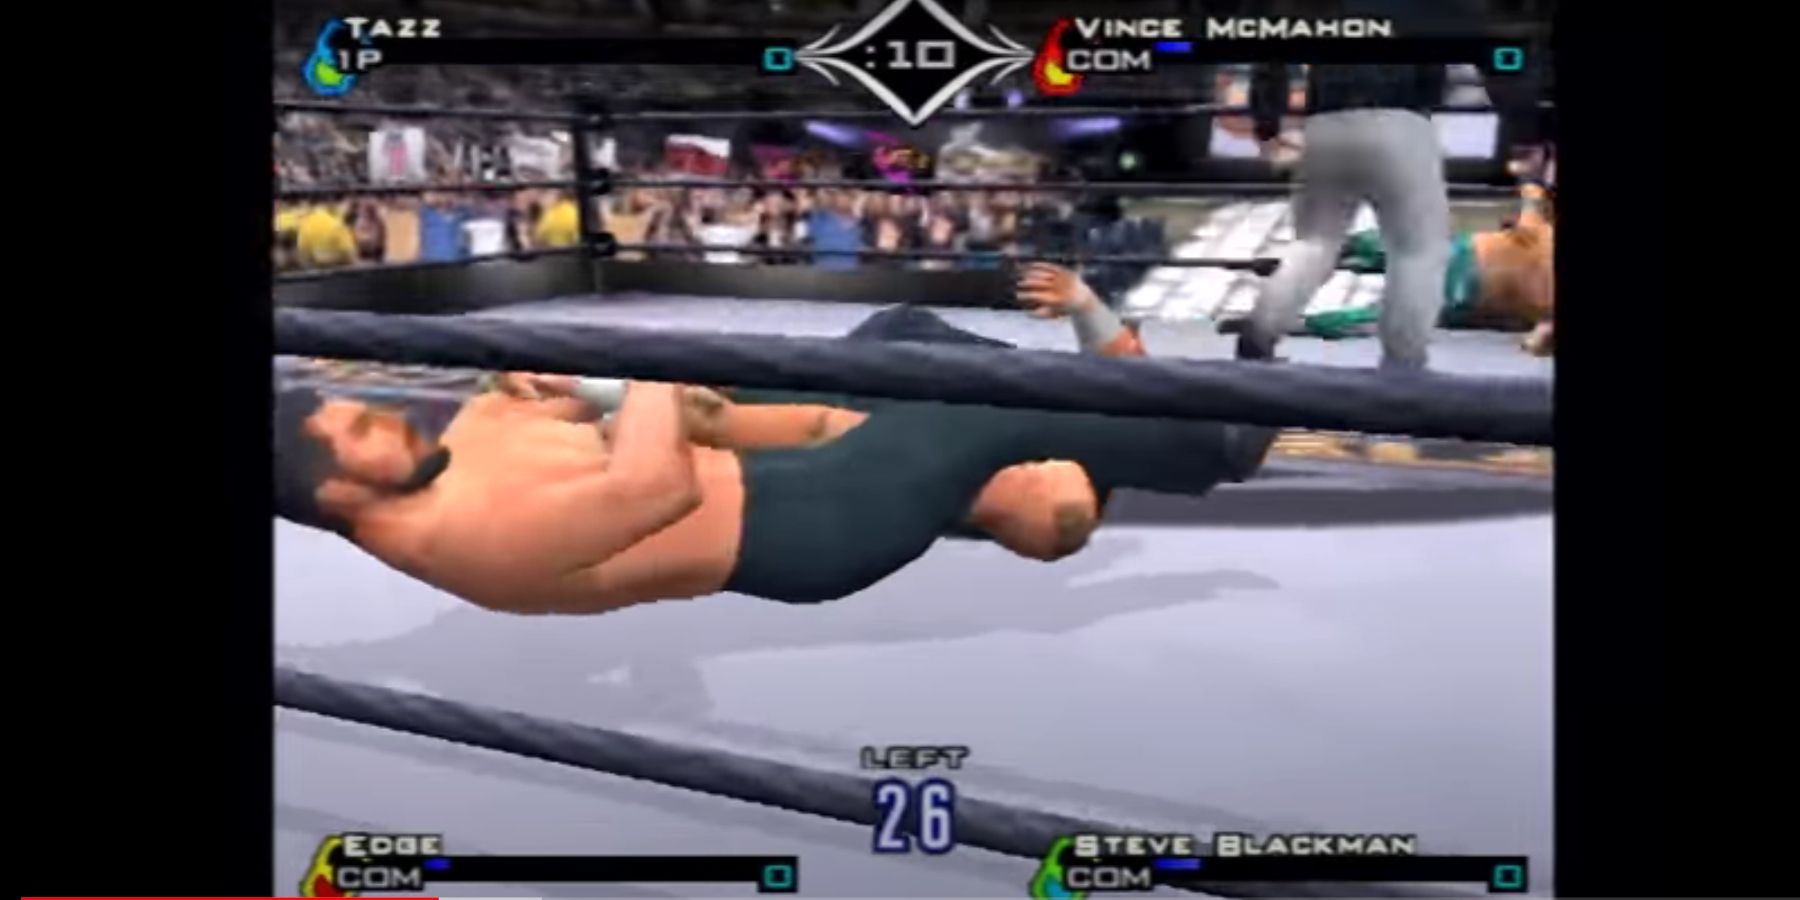 Steve Blackman hitting the armbar in a Royal Rumble